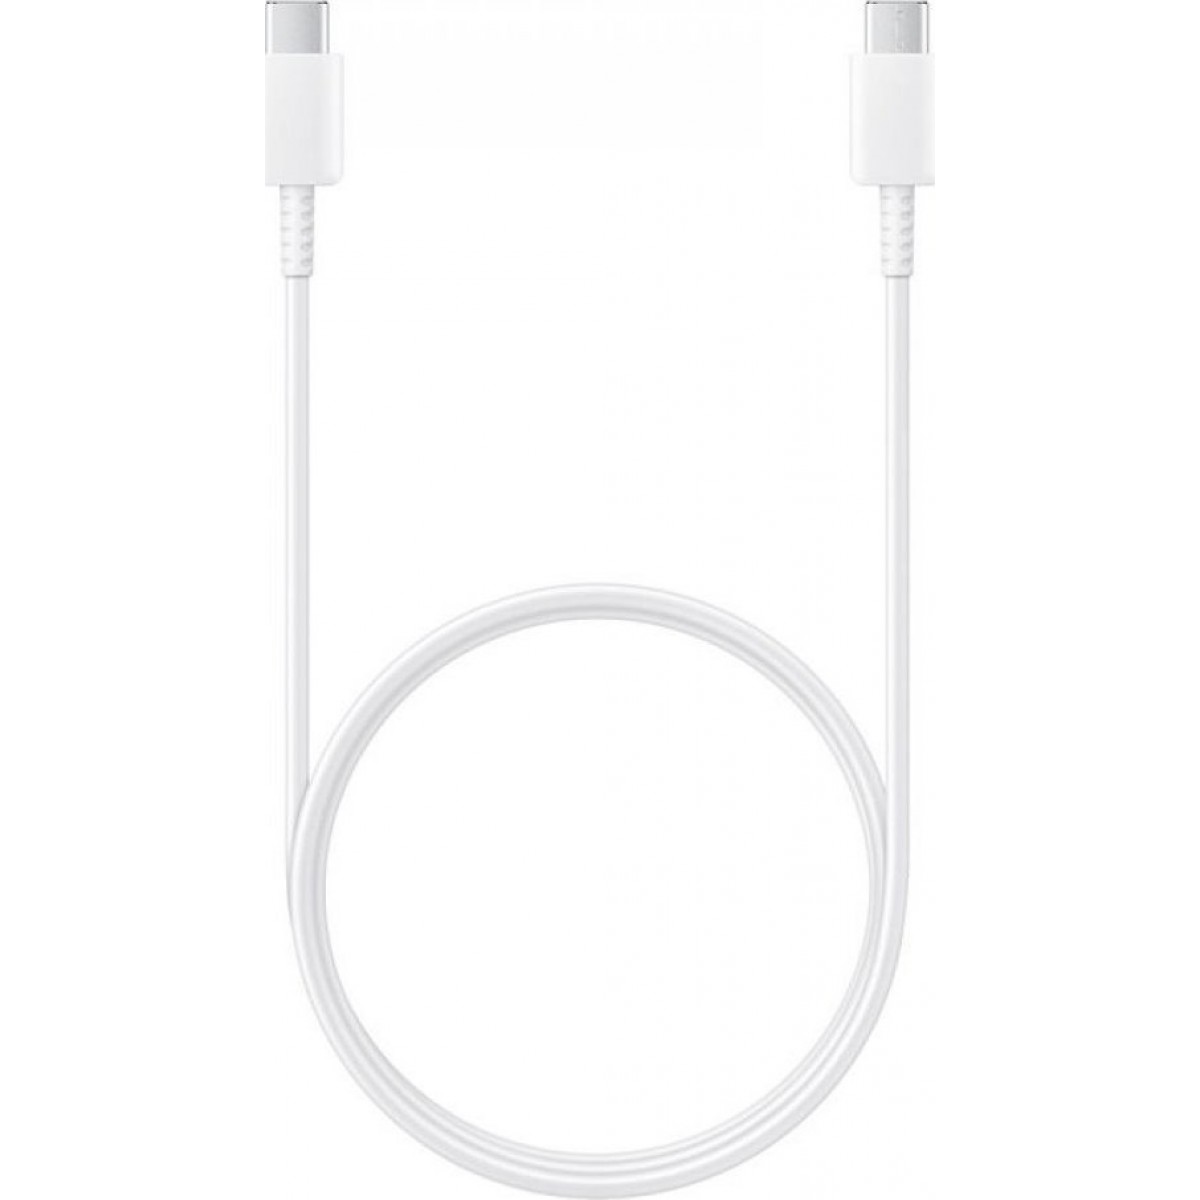 CABLE ORIGINAL SAMSUNG USB G - TYPE C (GALAXY A70) EP-DA705BWEGWW WHITE BLISTER